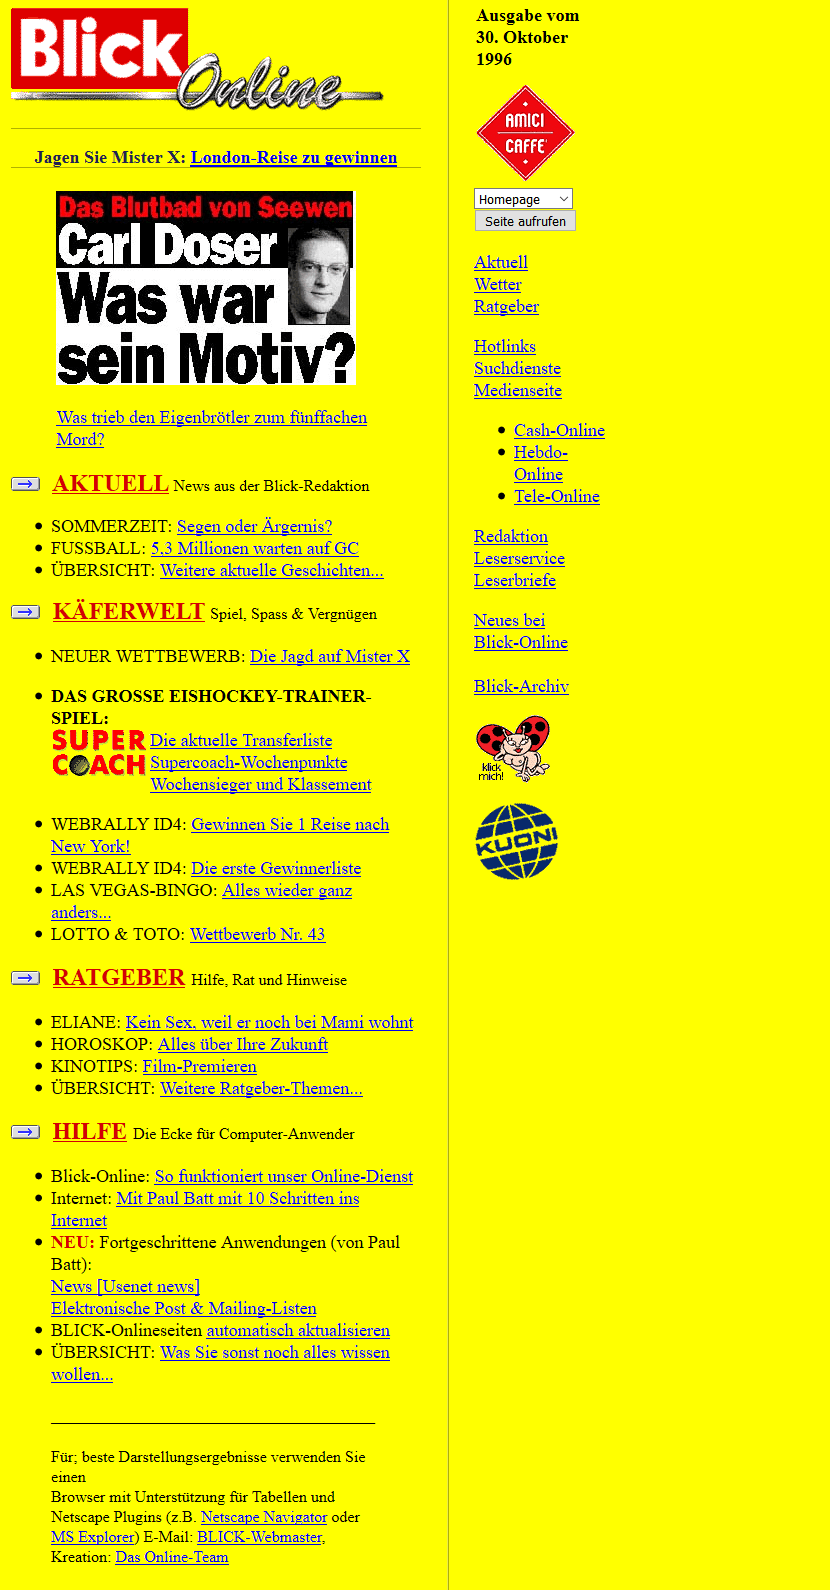 Blick.ch website in 1996